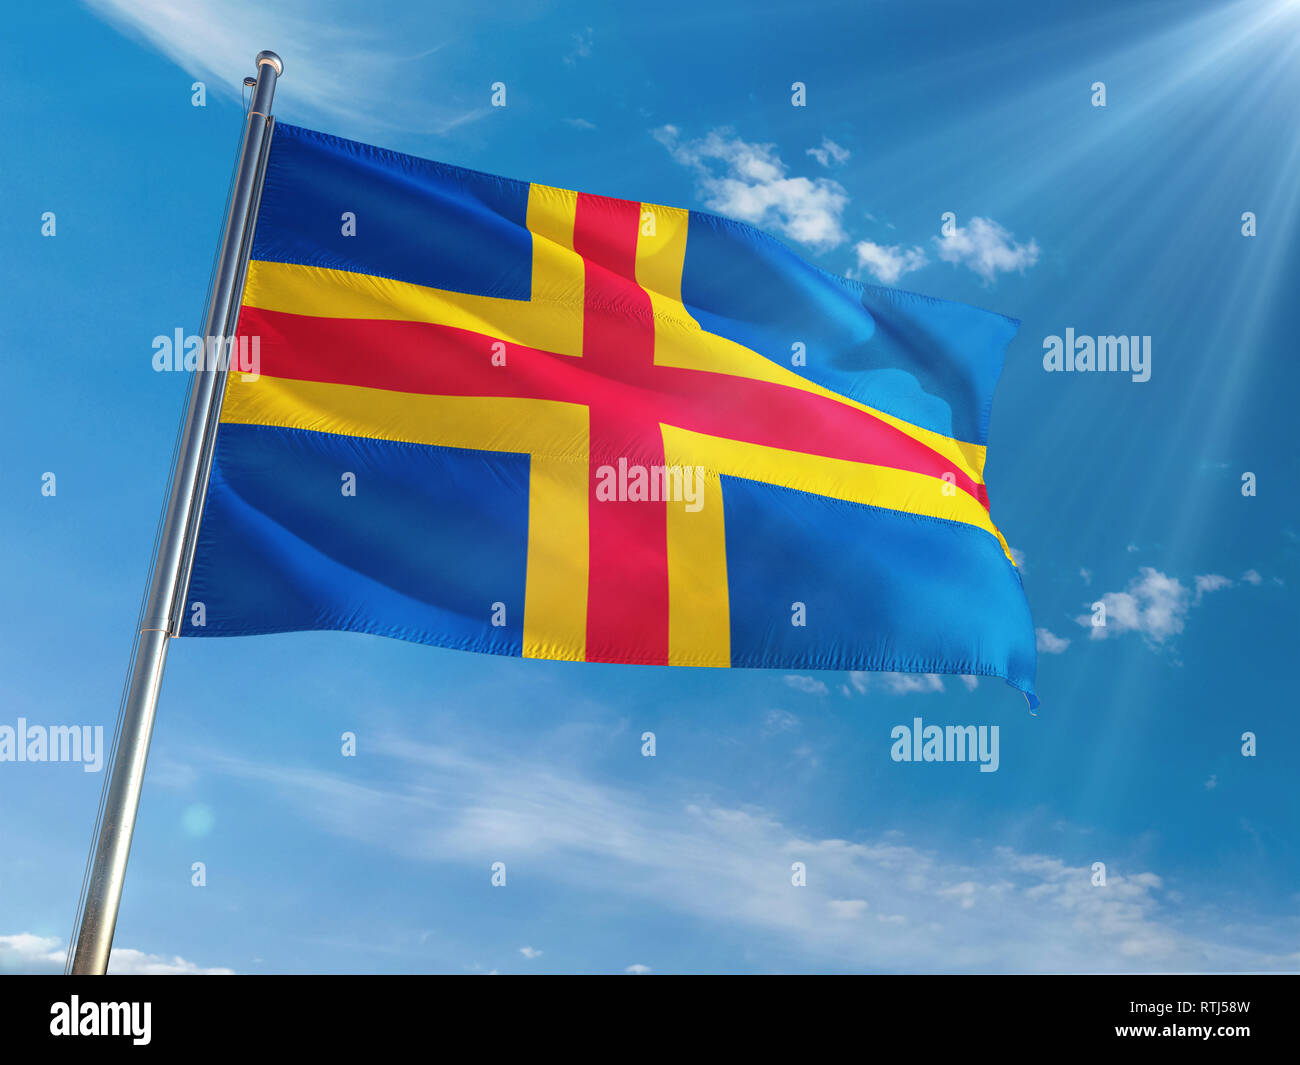 Aland Islands National Flag Waving on pole against sunny blue sky background. High Definition Stock Photo